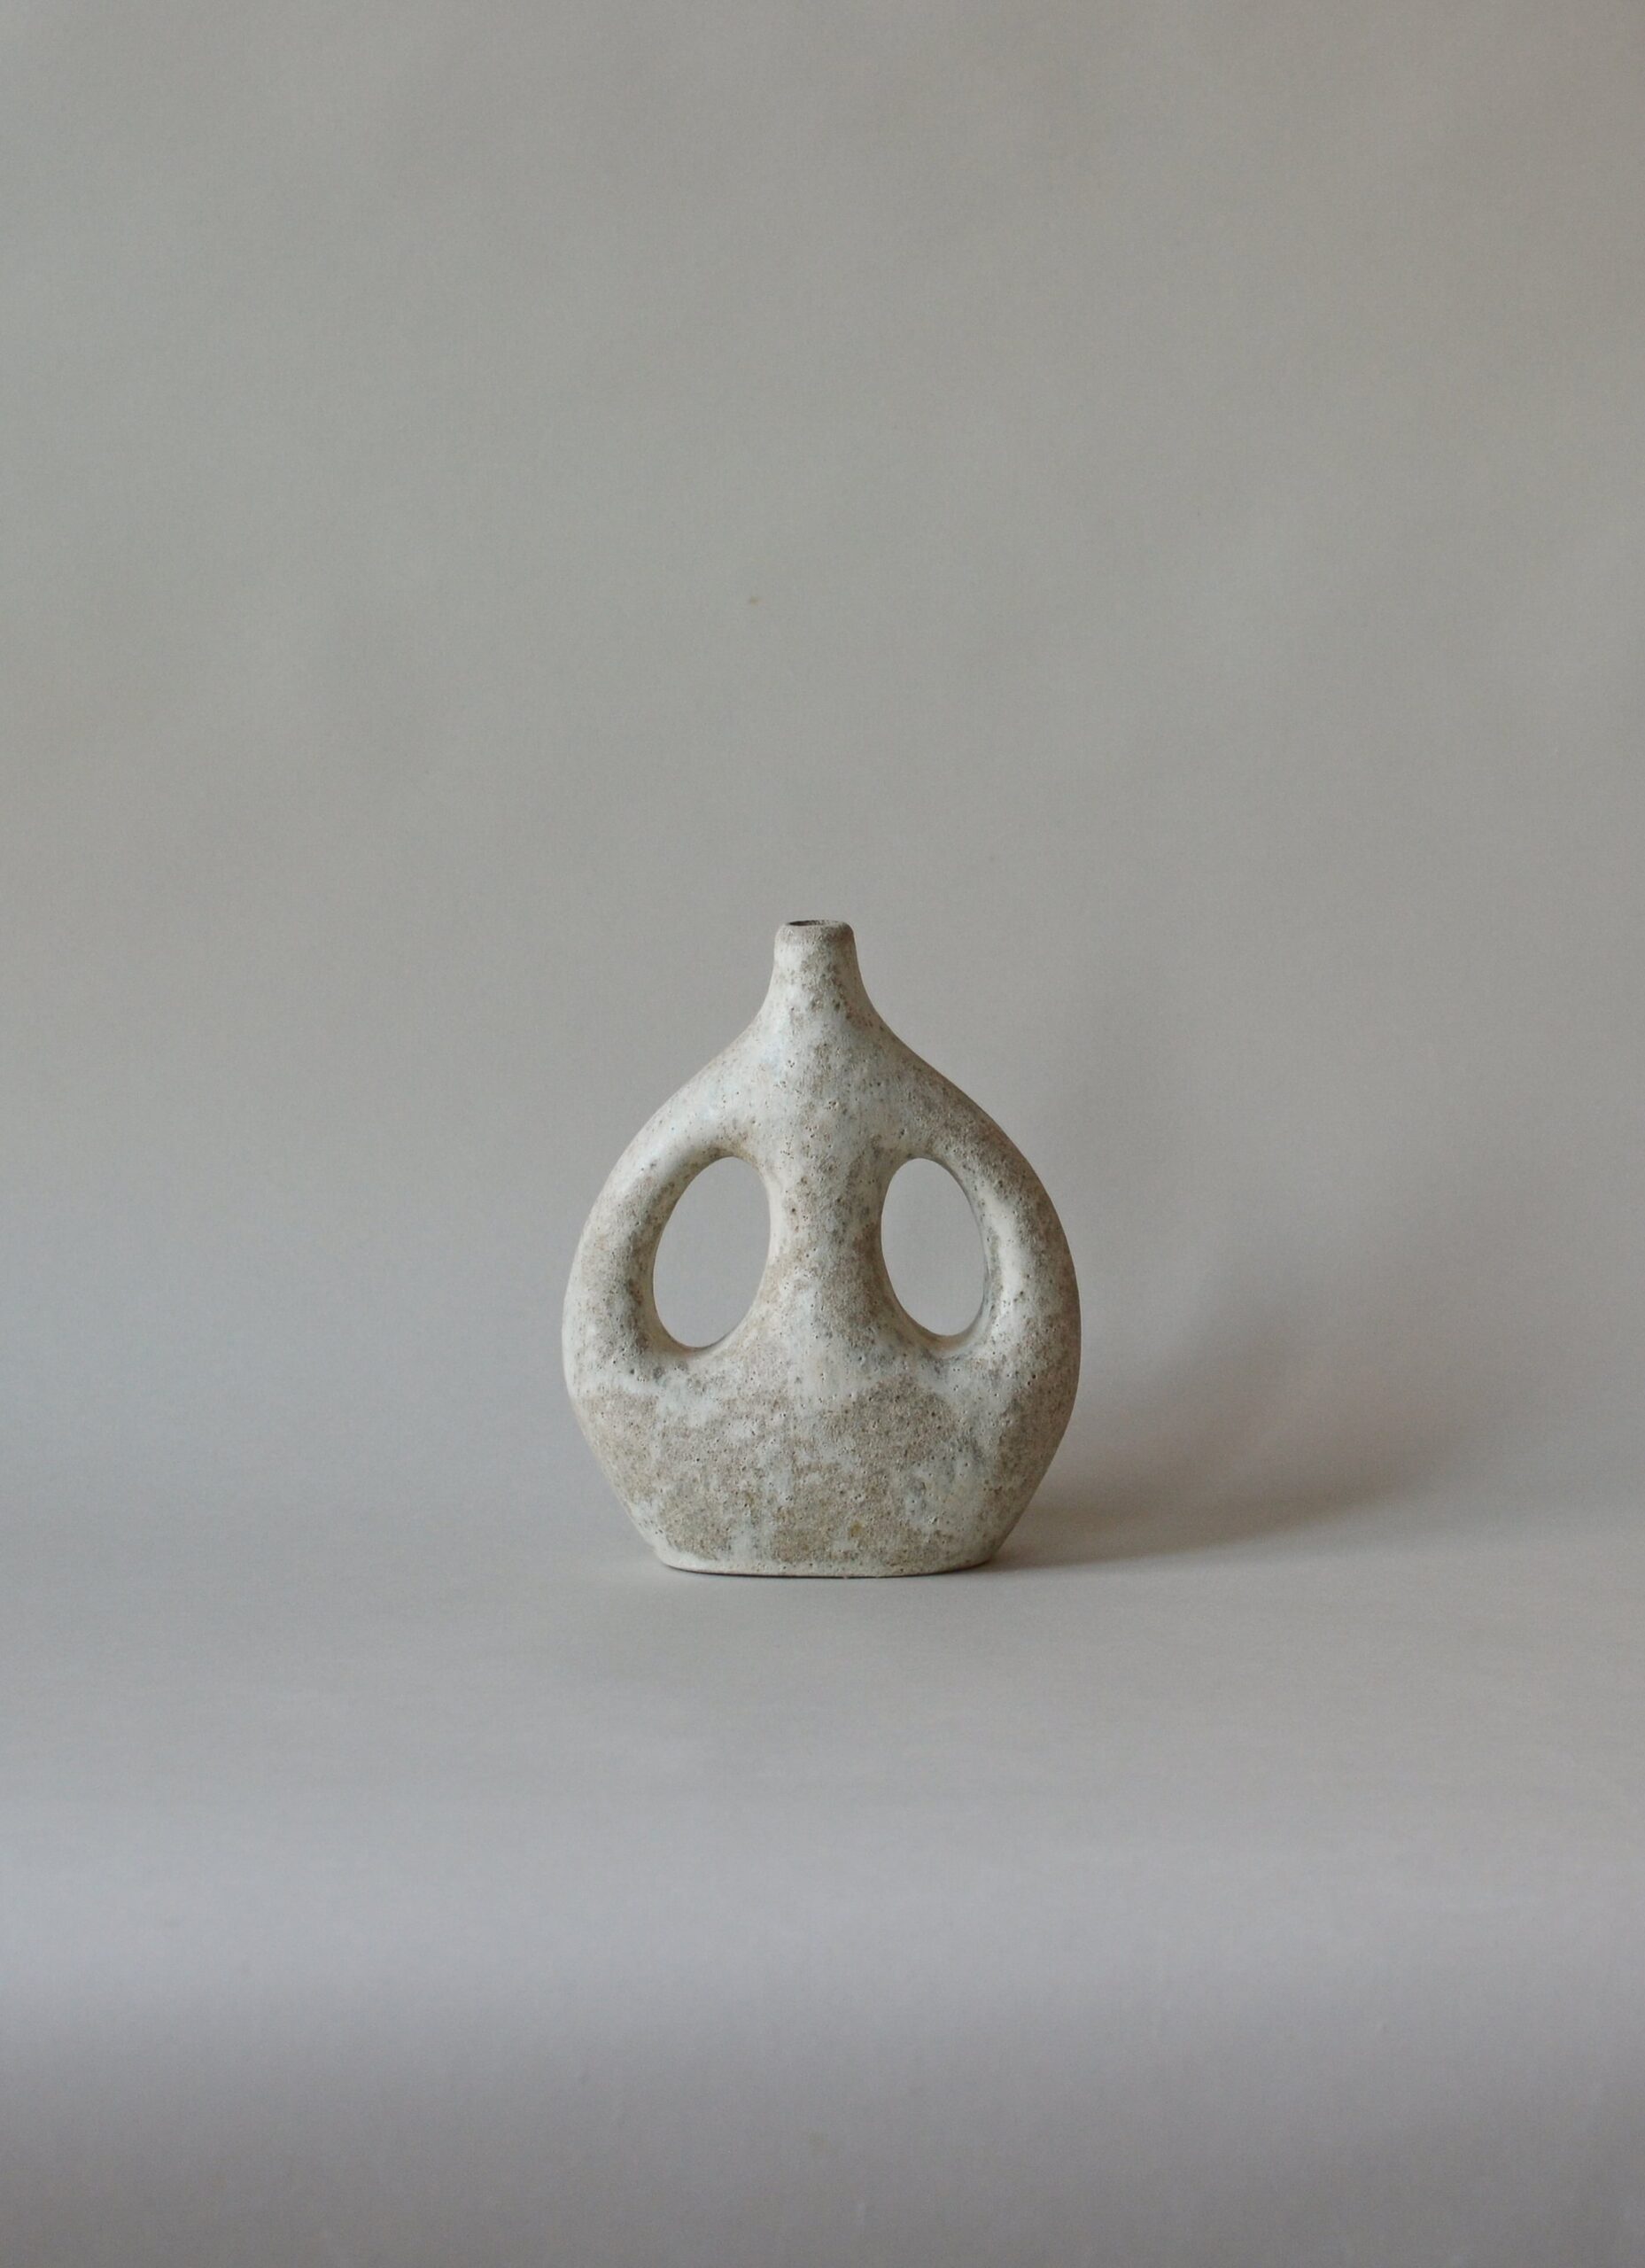 Viv Lee - Handmade stoneware vessel - Sympoiesis V - Medium stone